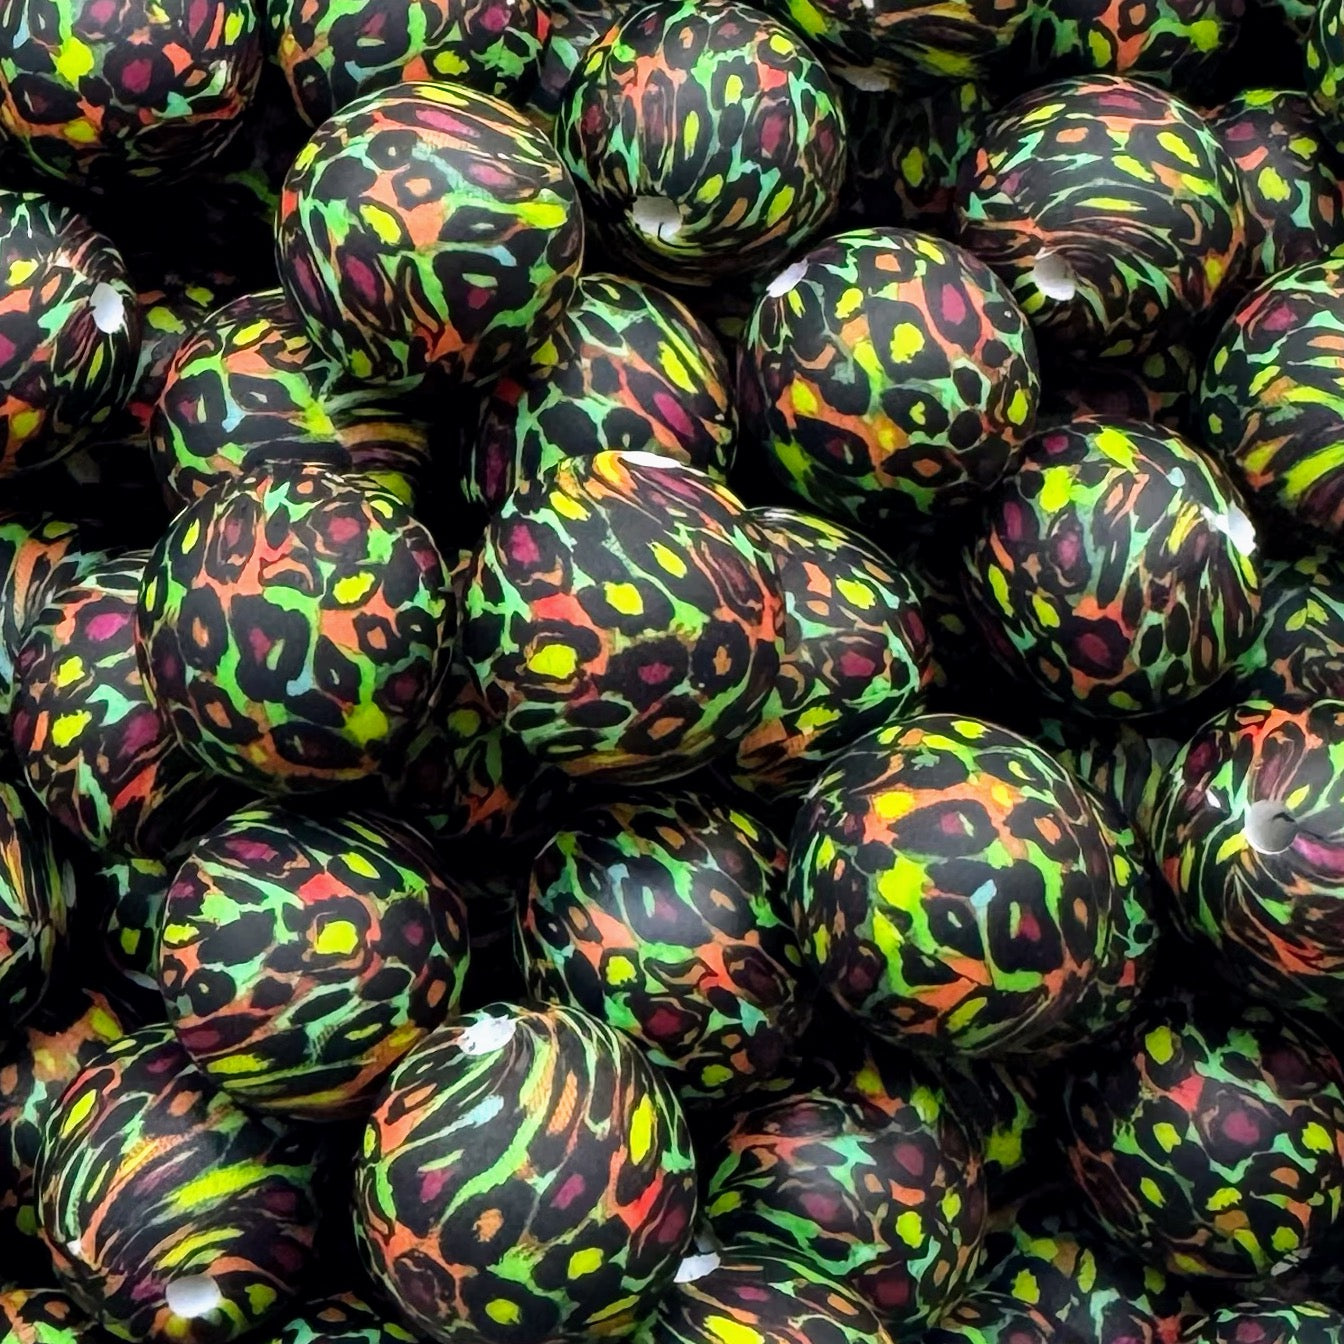 15mm Neon Leopard Print Silicone Bead